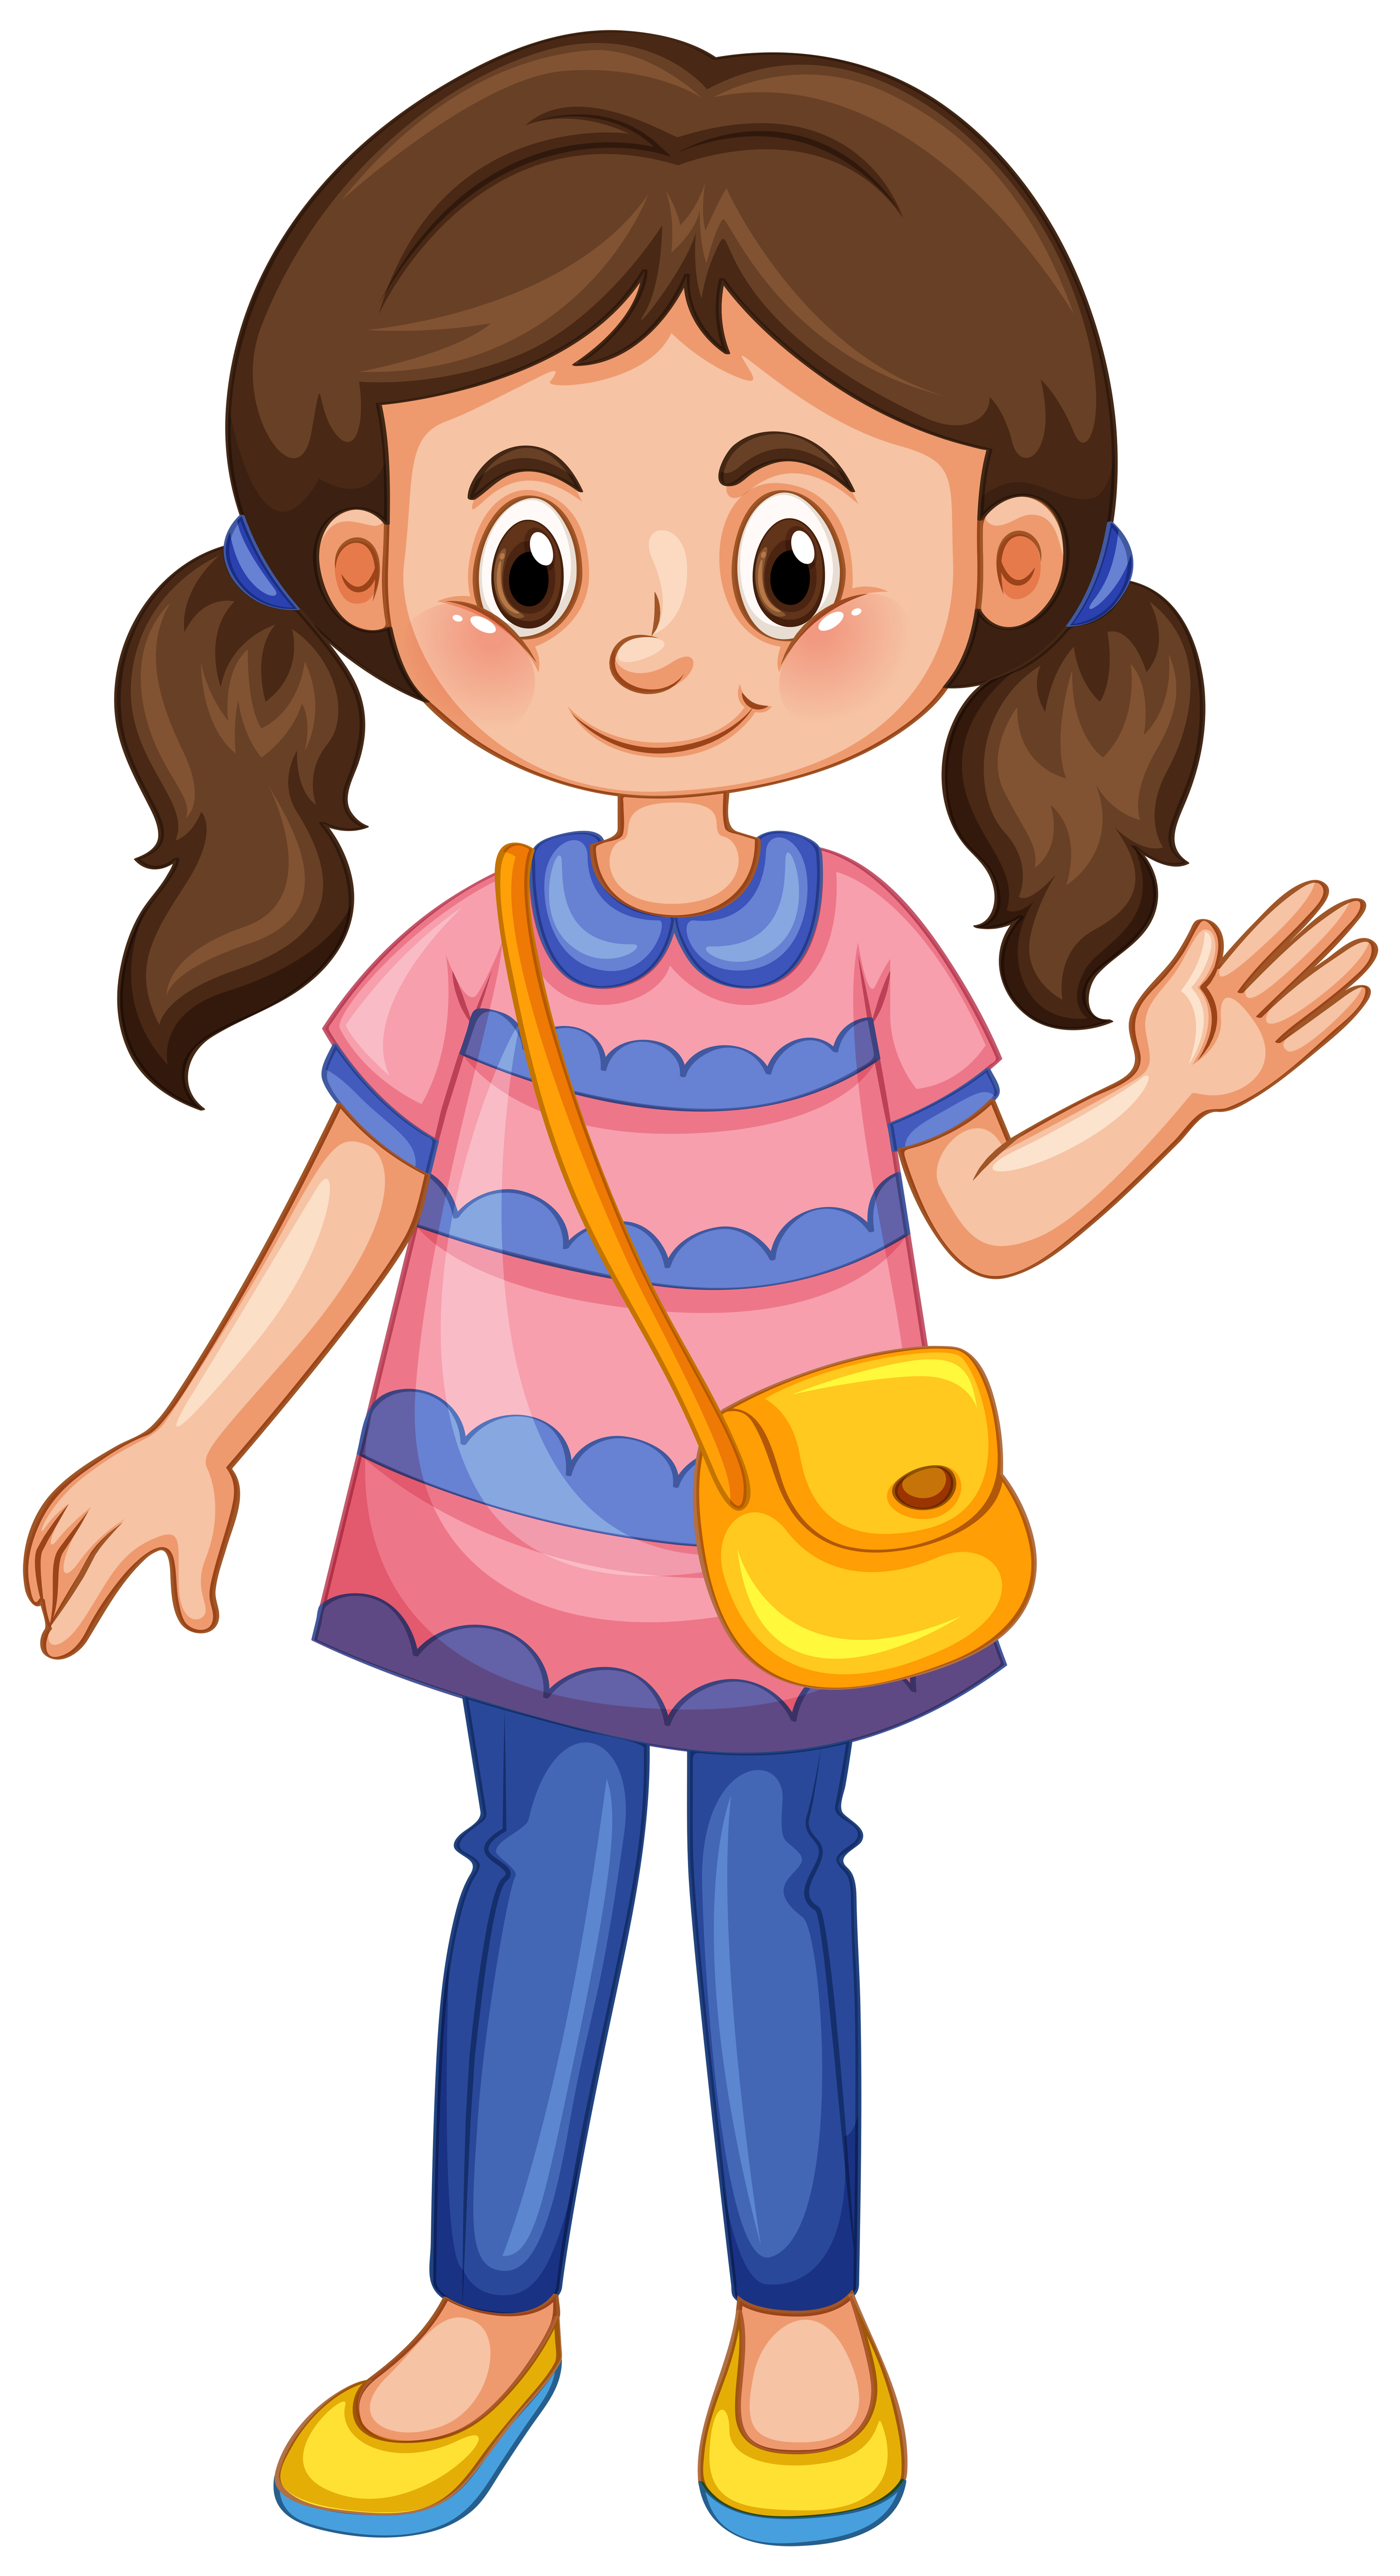 Little girl waving hand 549886 - Download Free Vectors, Clipart ...
 Cartoon Girl Waving Hello